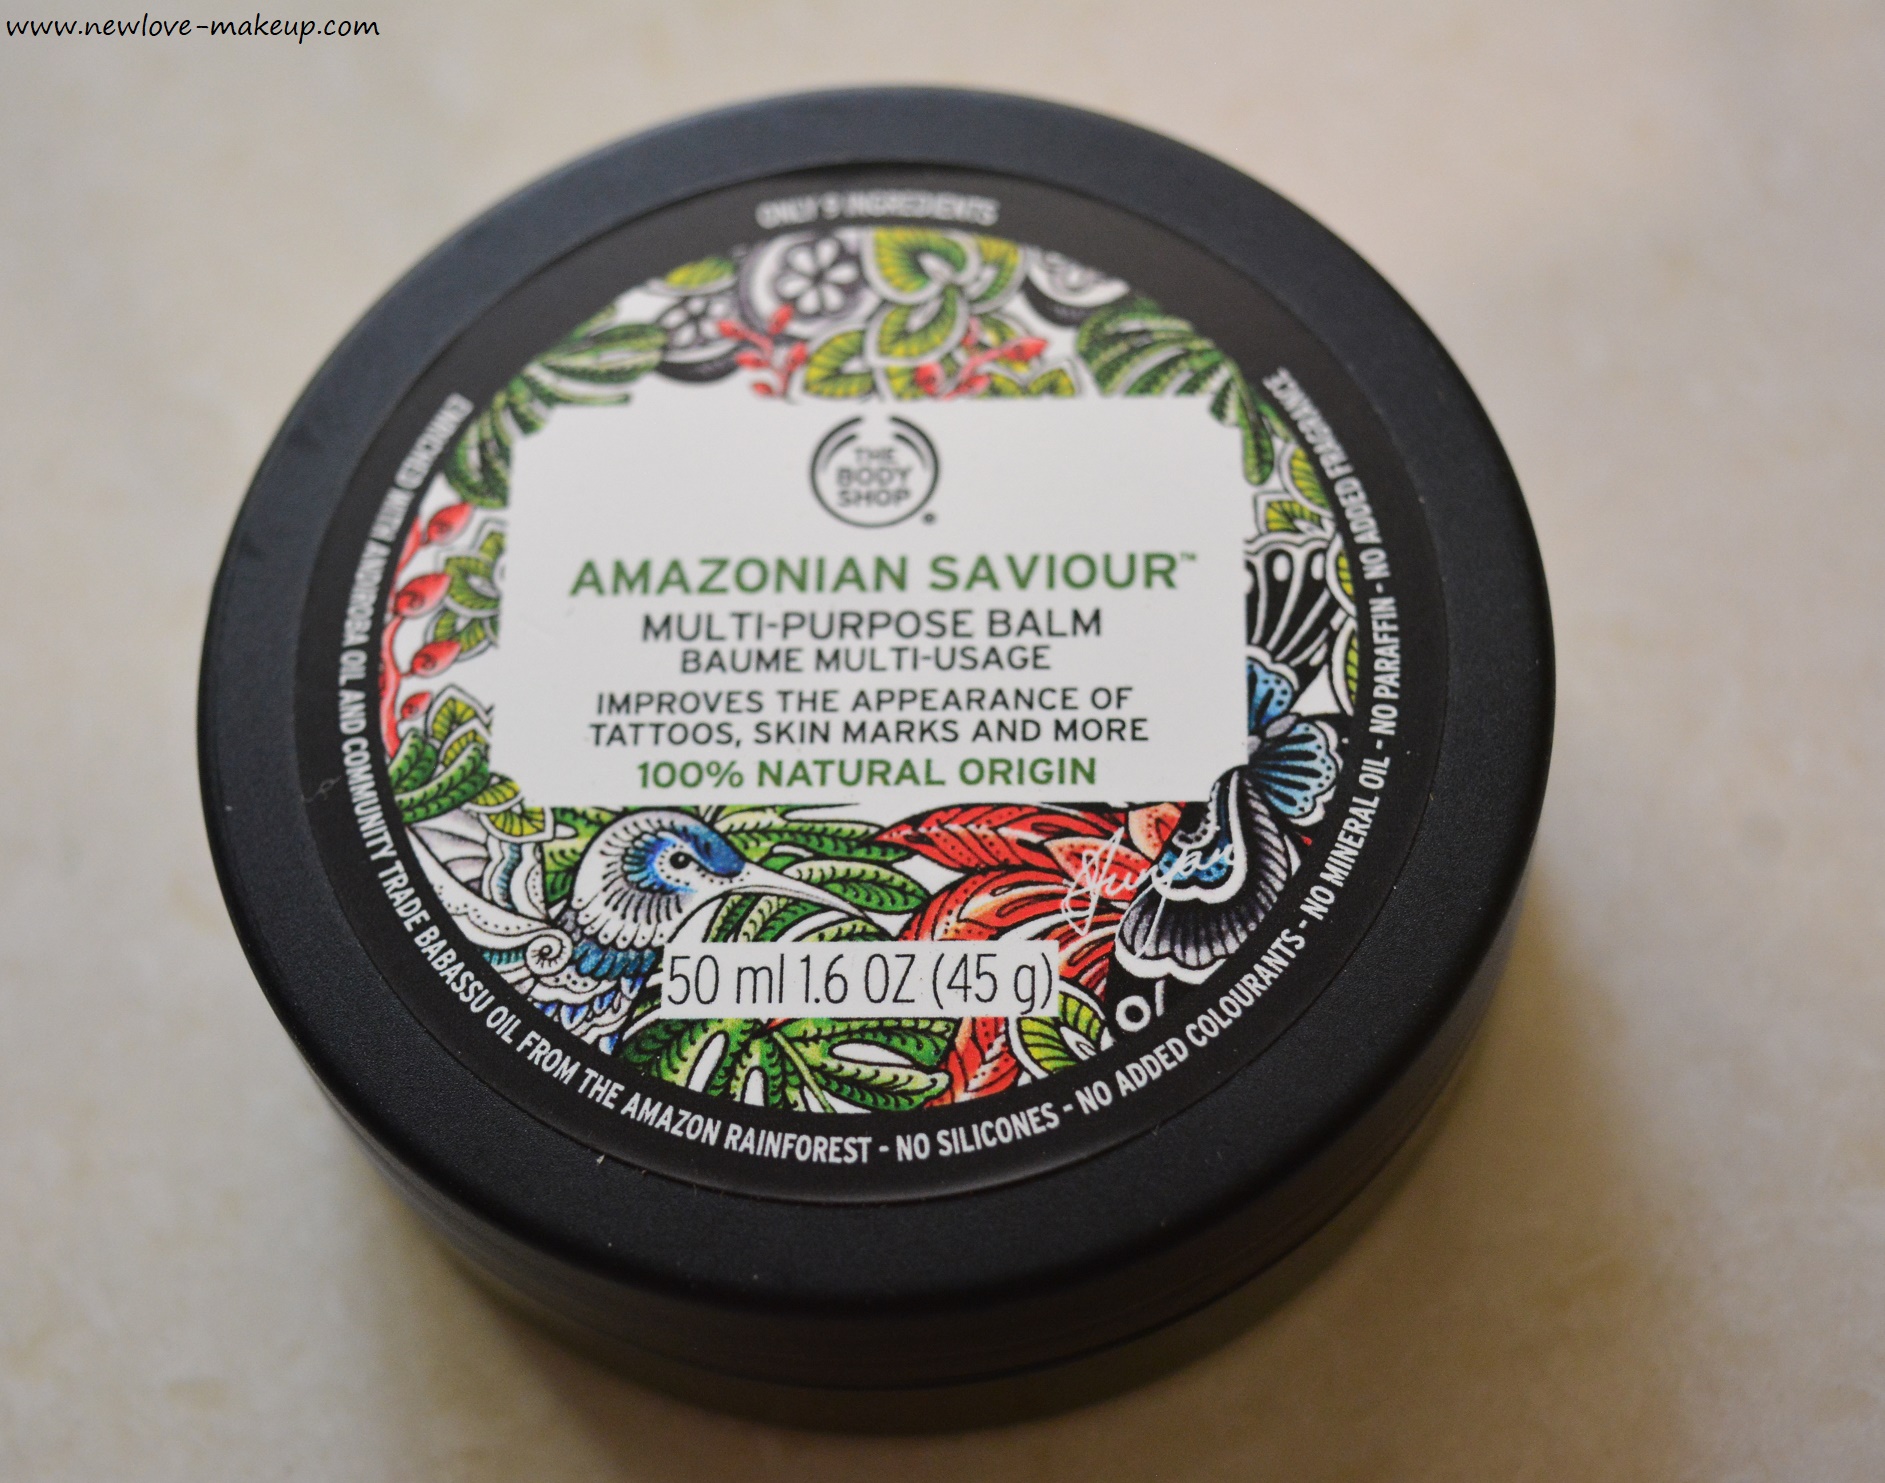 The Body Shop Fuji Green Tea Haircare, Amazonian Saviour Balm, Spa of the World New Launch Review